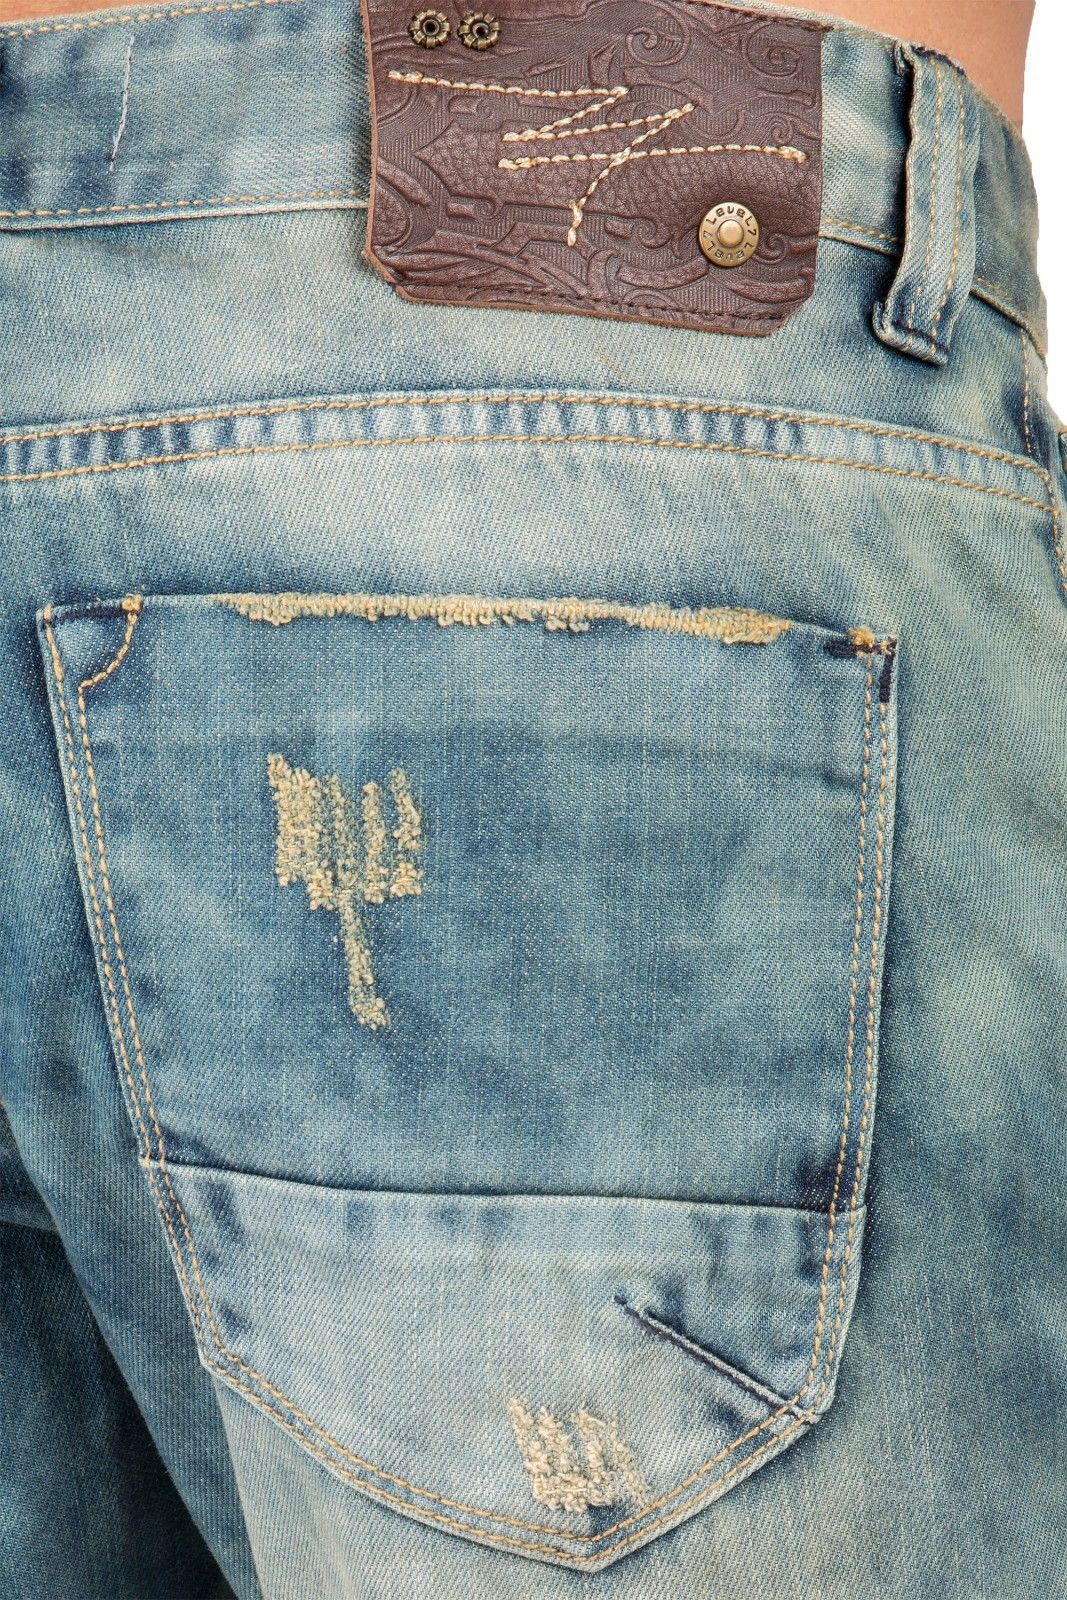 Slim Straight Clouded Mojave Blue Premium Denim Signature 5 Pocket Jeans Distressed